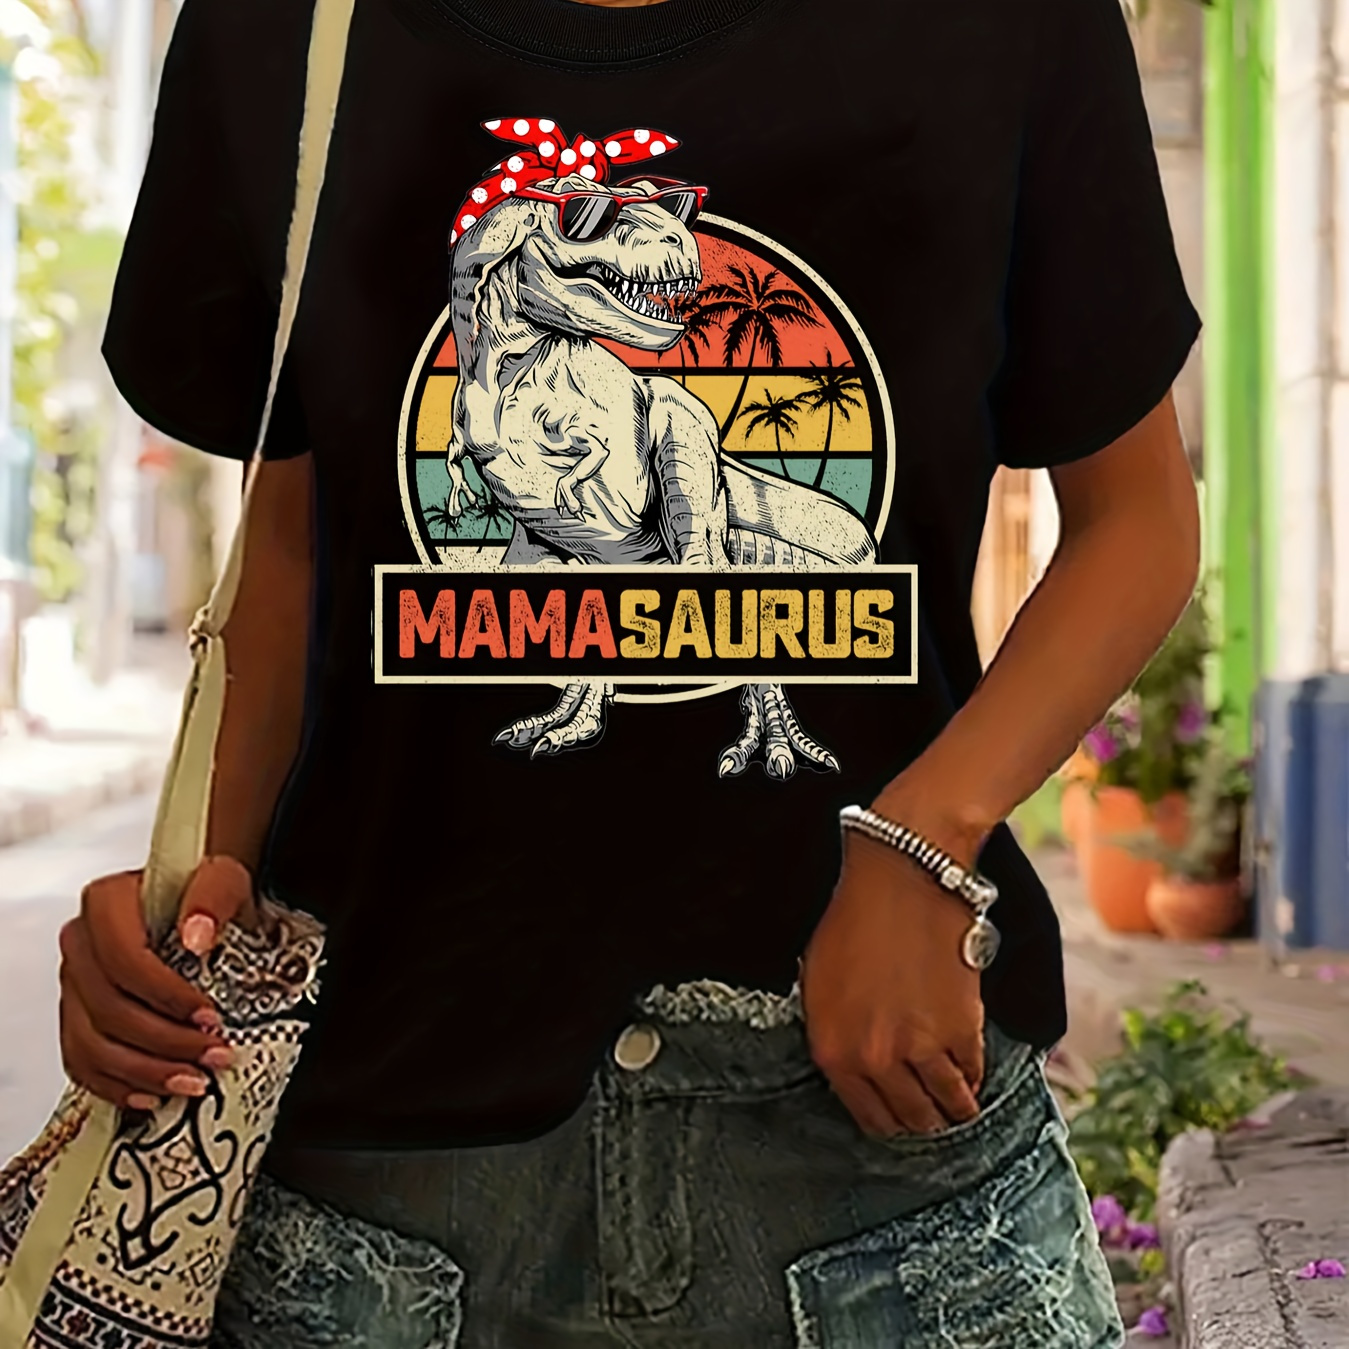 

Dinosaur Print T-shirt, Short Sleeve Crew Neck Casual Top For Summer & Spring, Women's Clothing